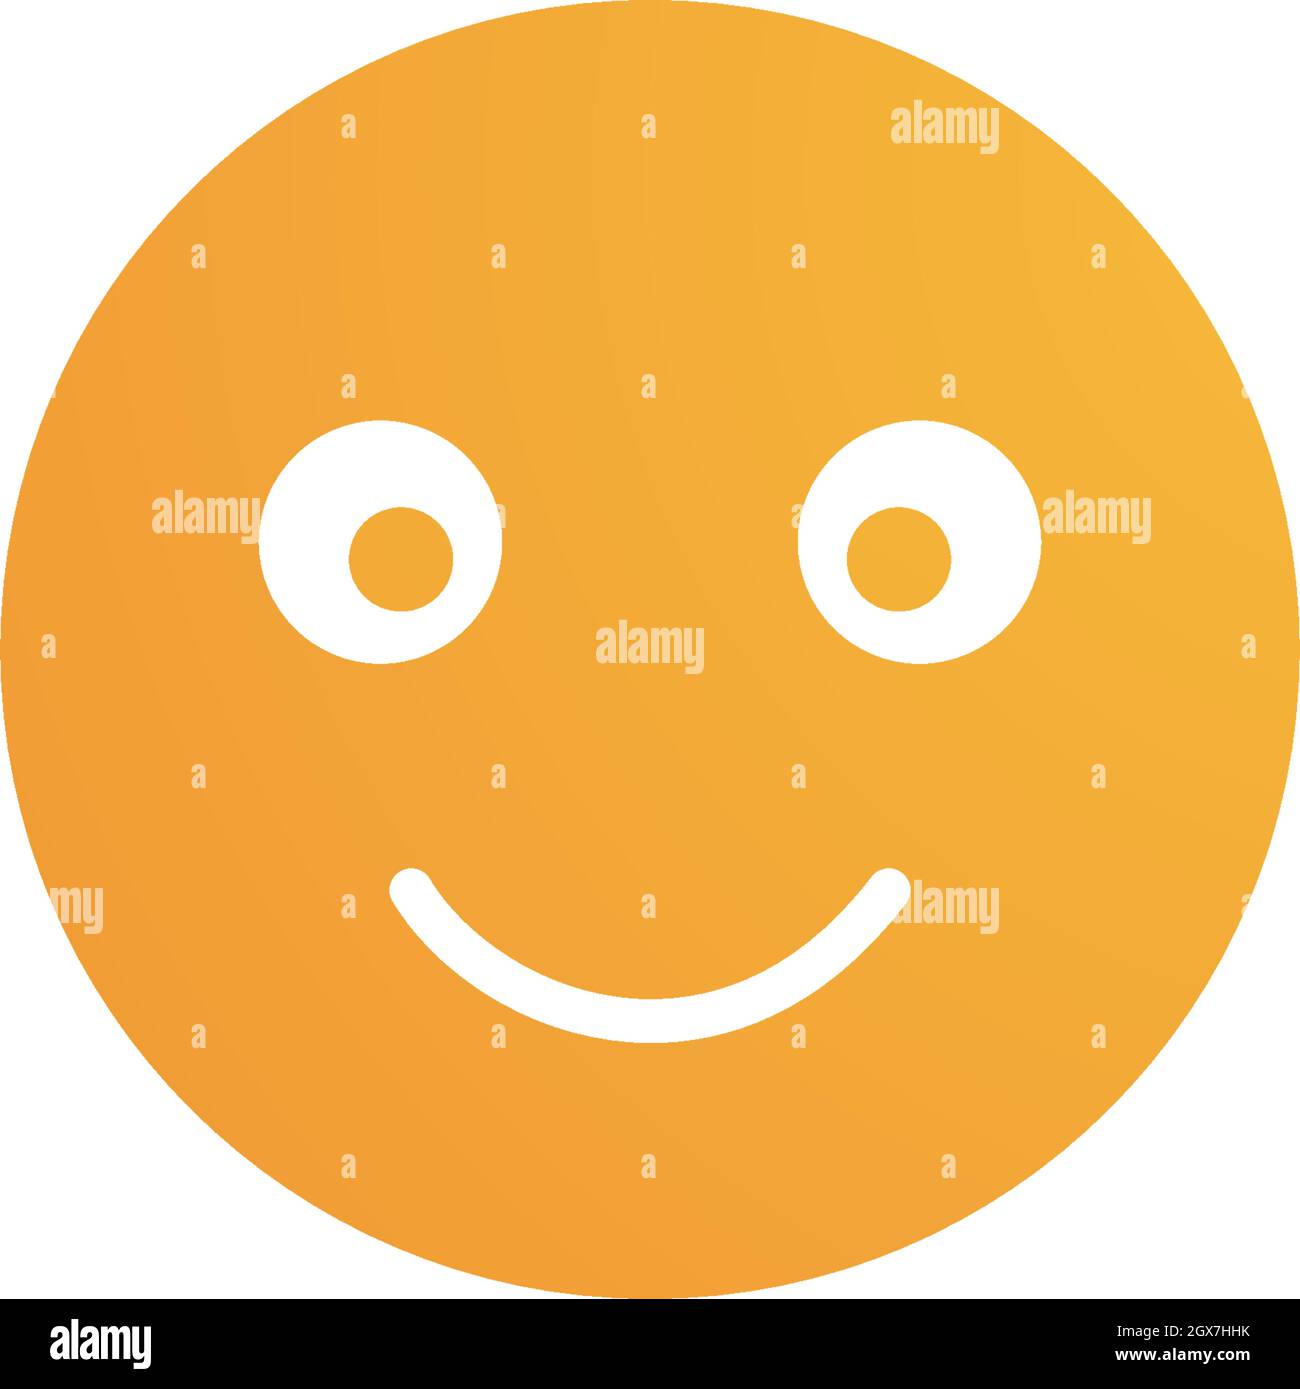 Emoticon template face expression icon vector Stock Vector Image & Art ...